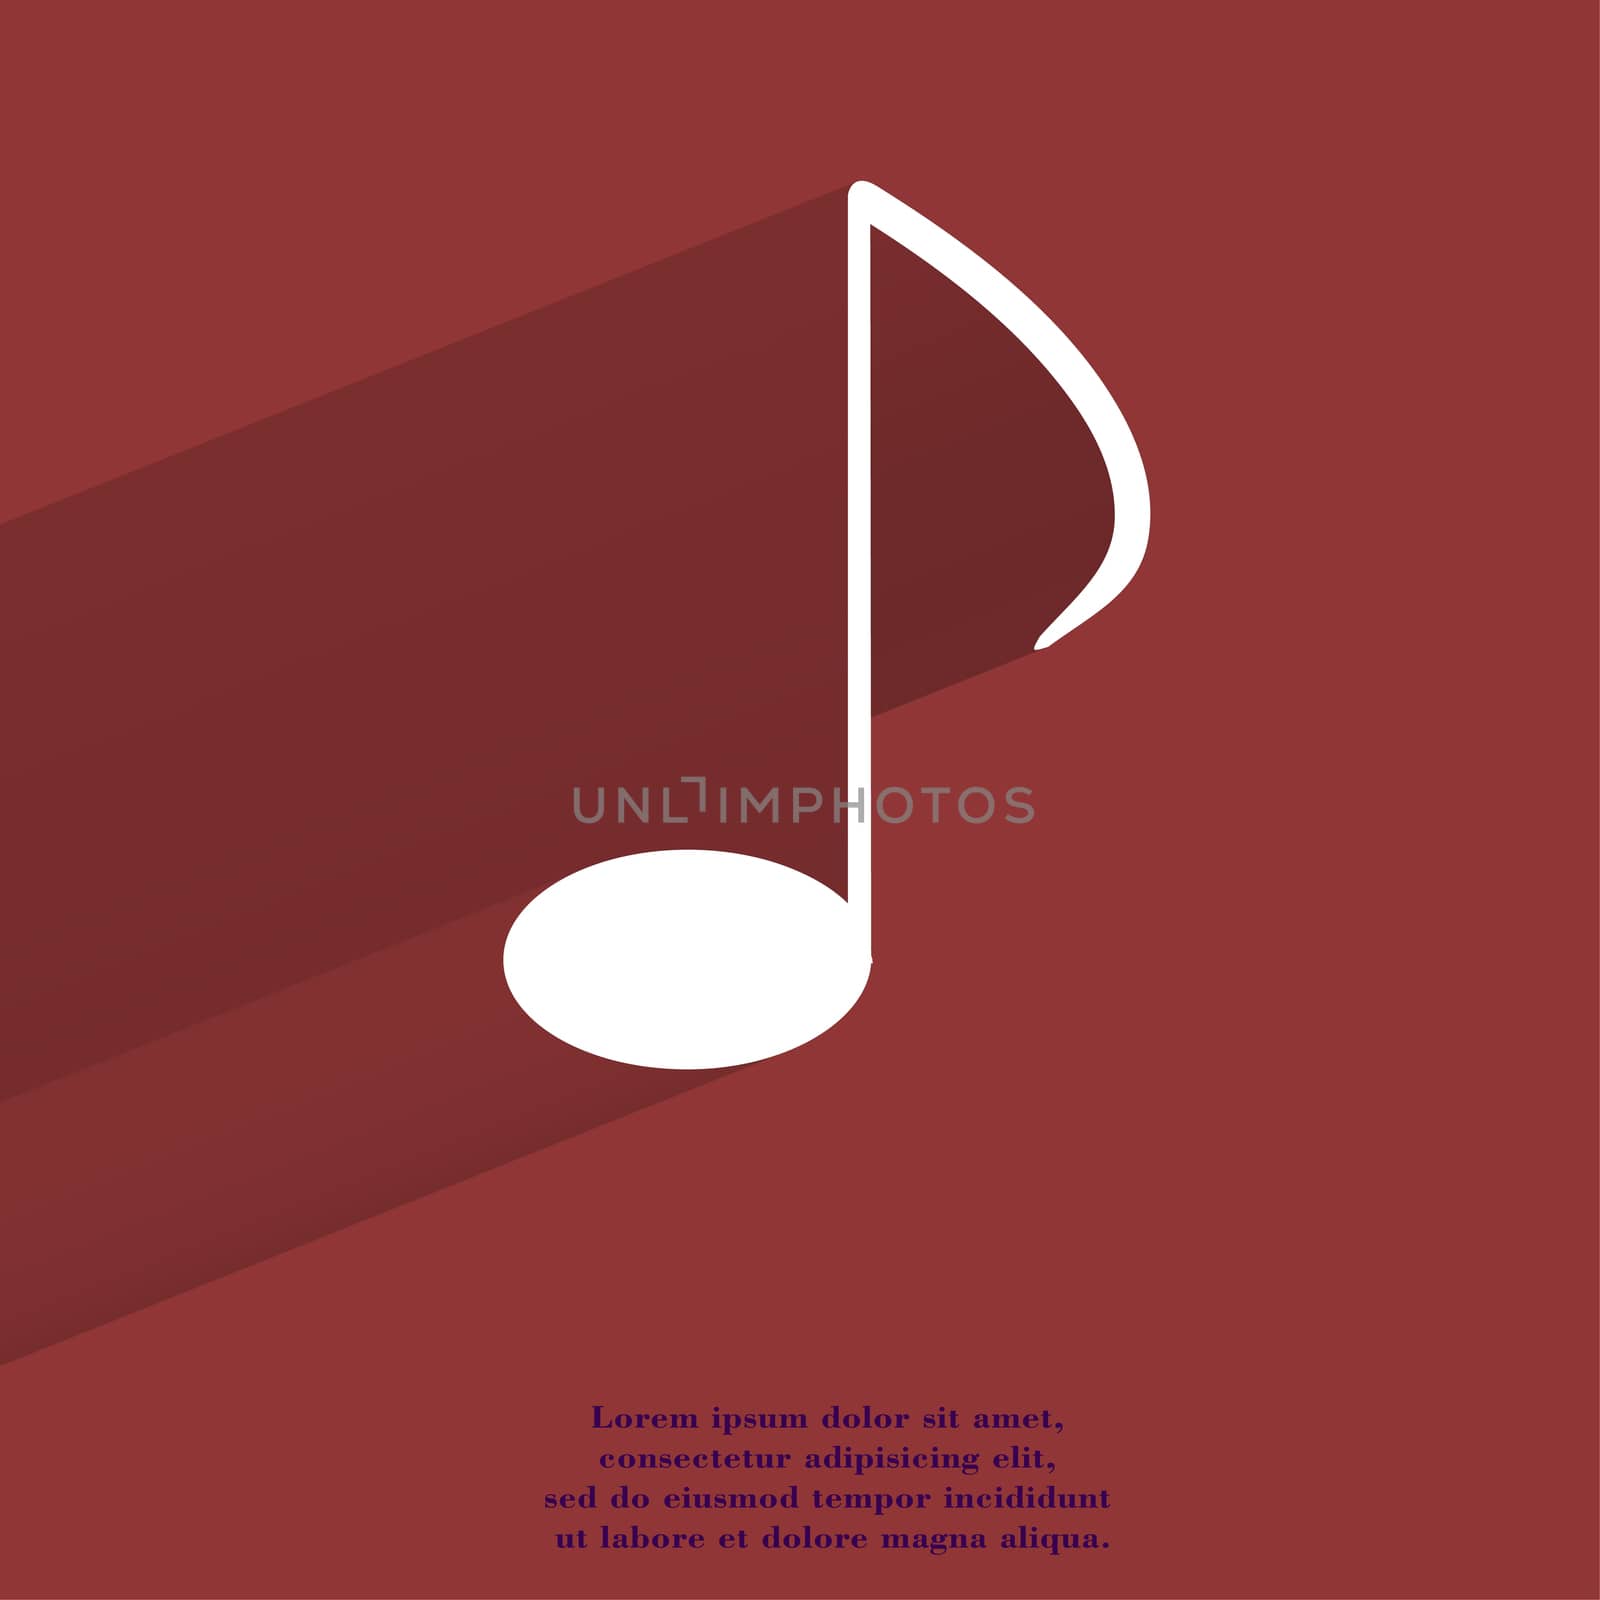 Music elements notes web icon, flat design.  illustration. 